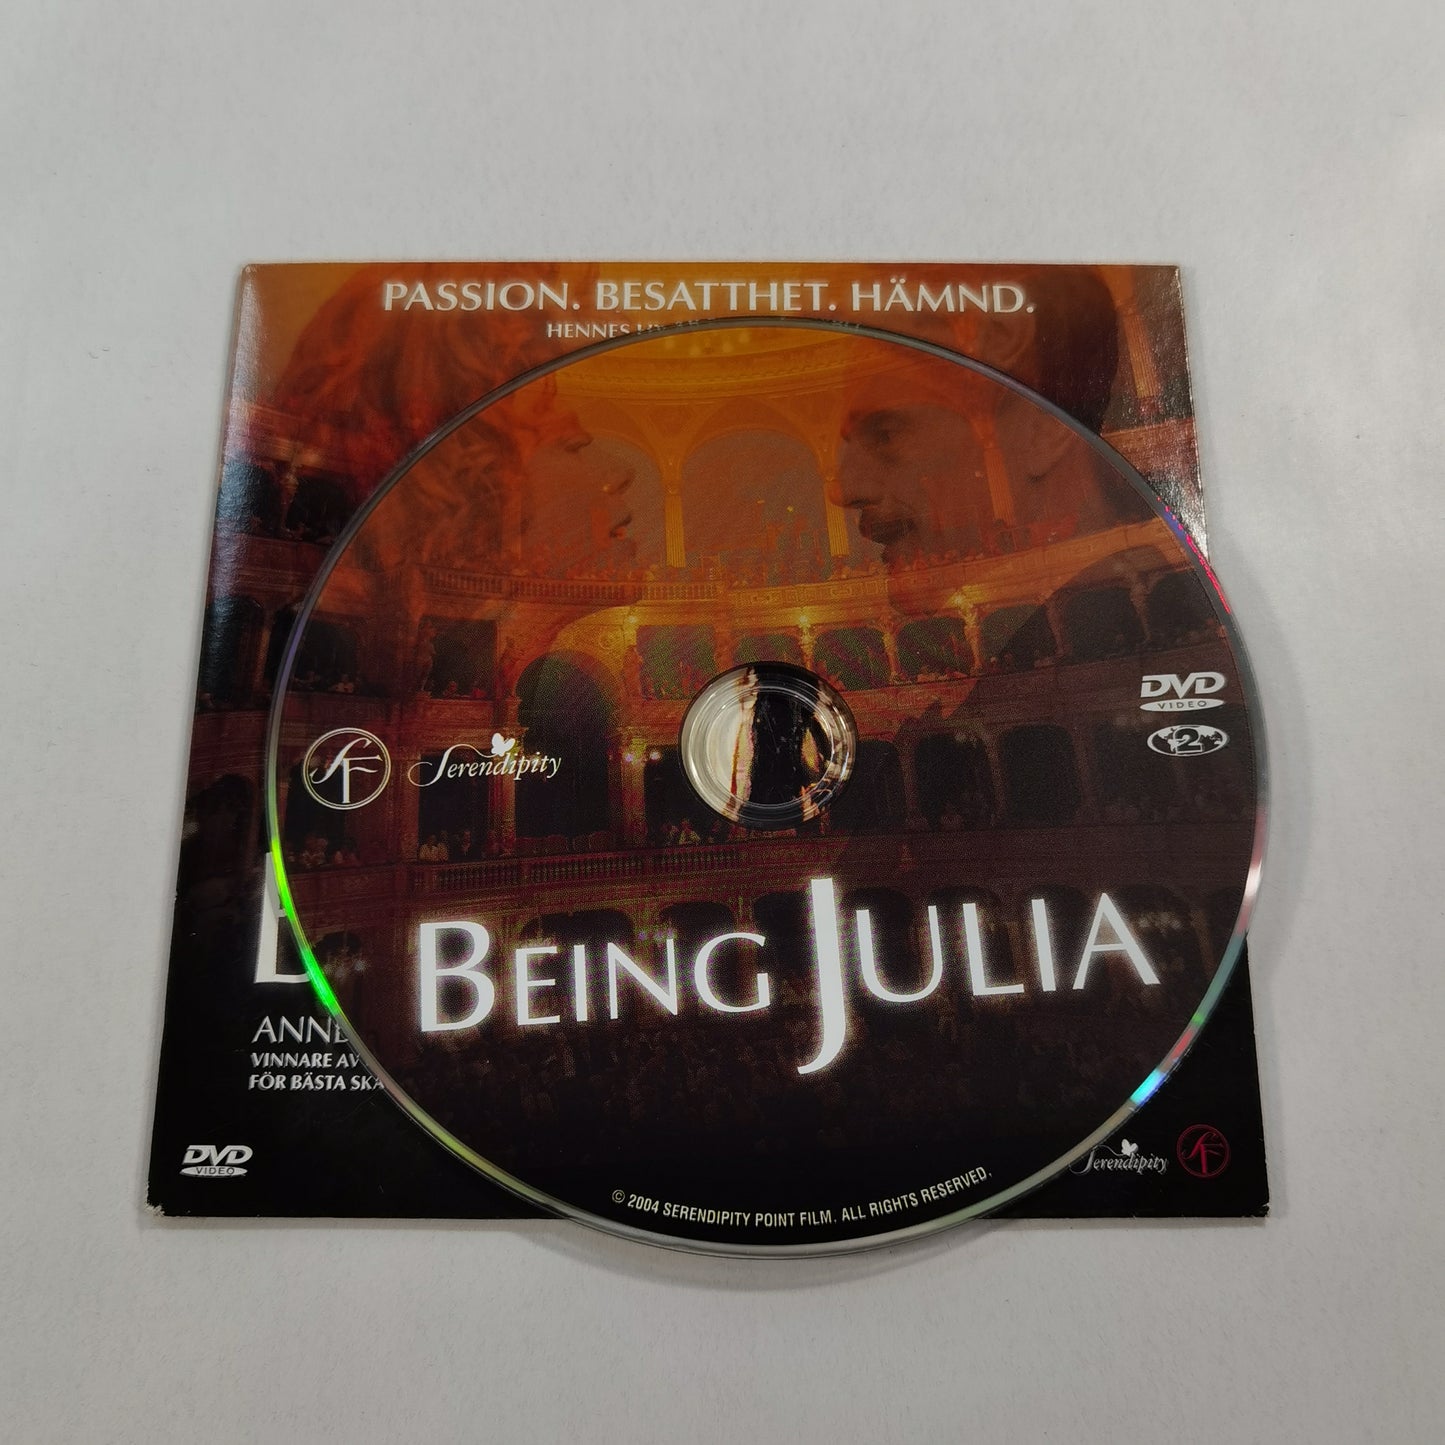 Being Julia (2004) - DVD SE Mini